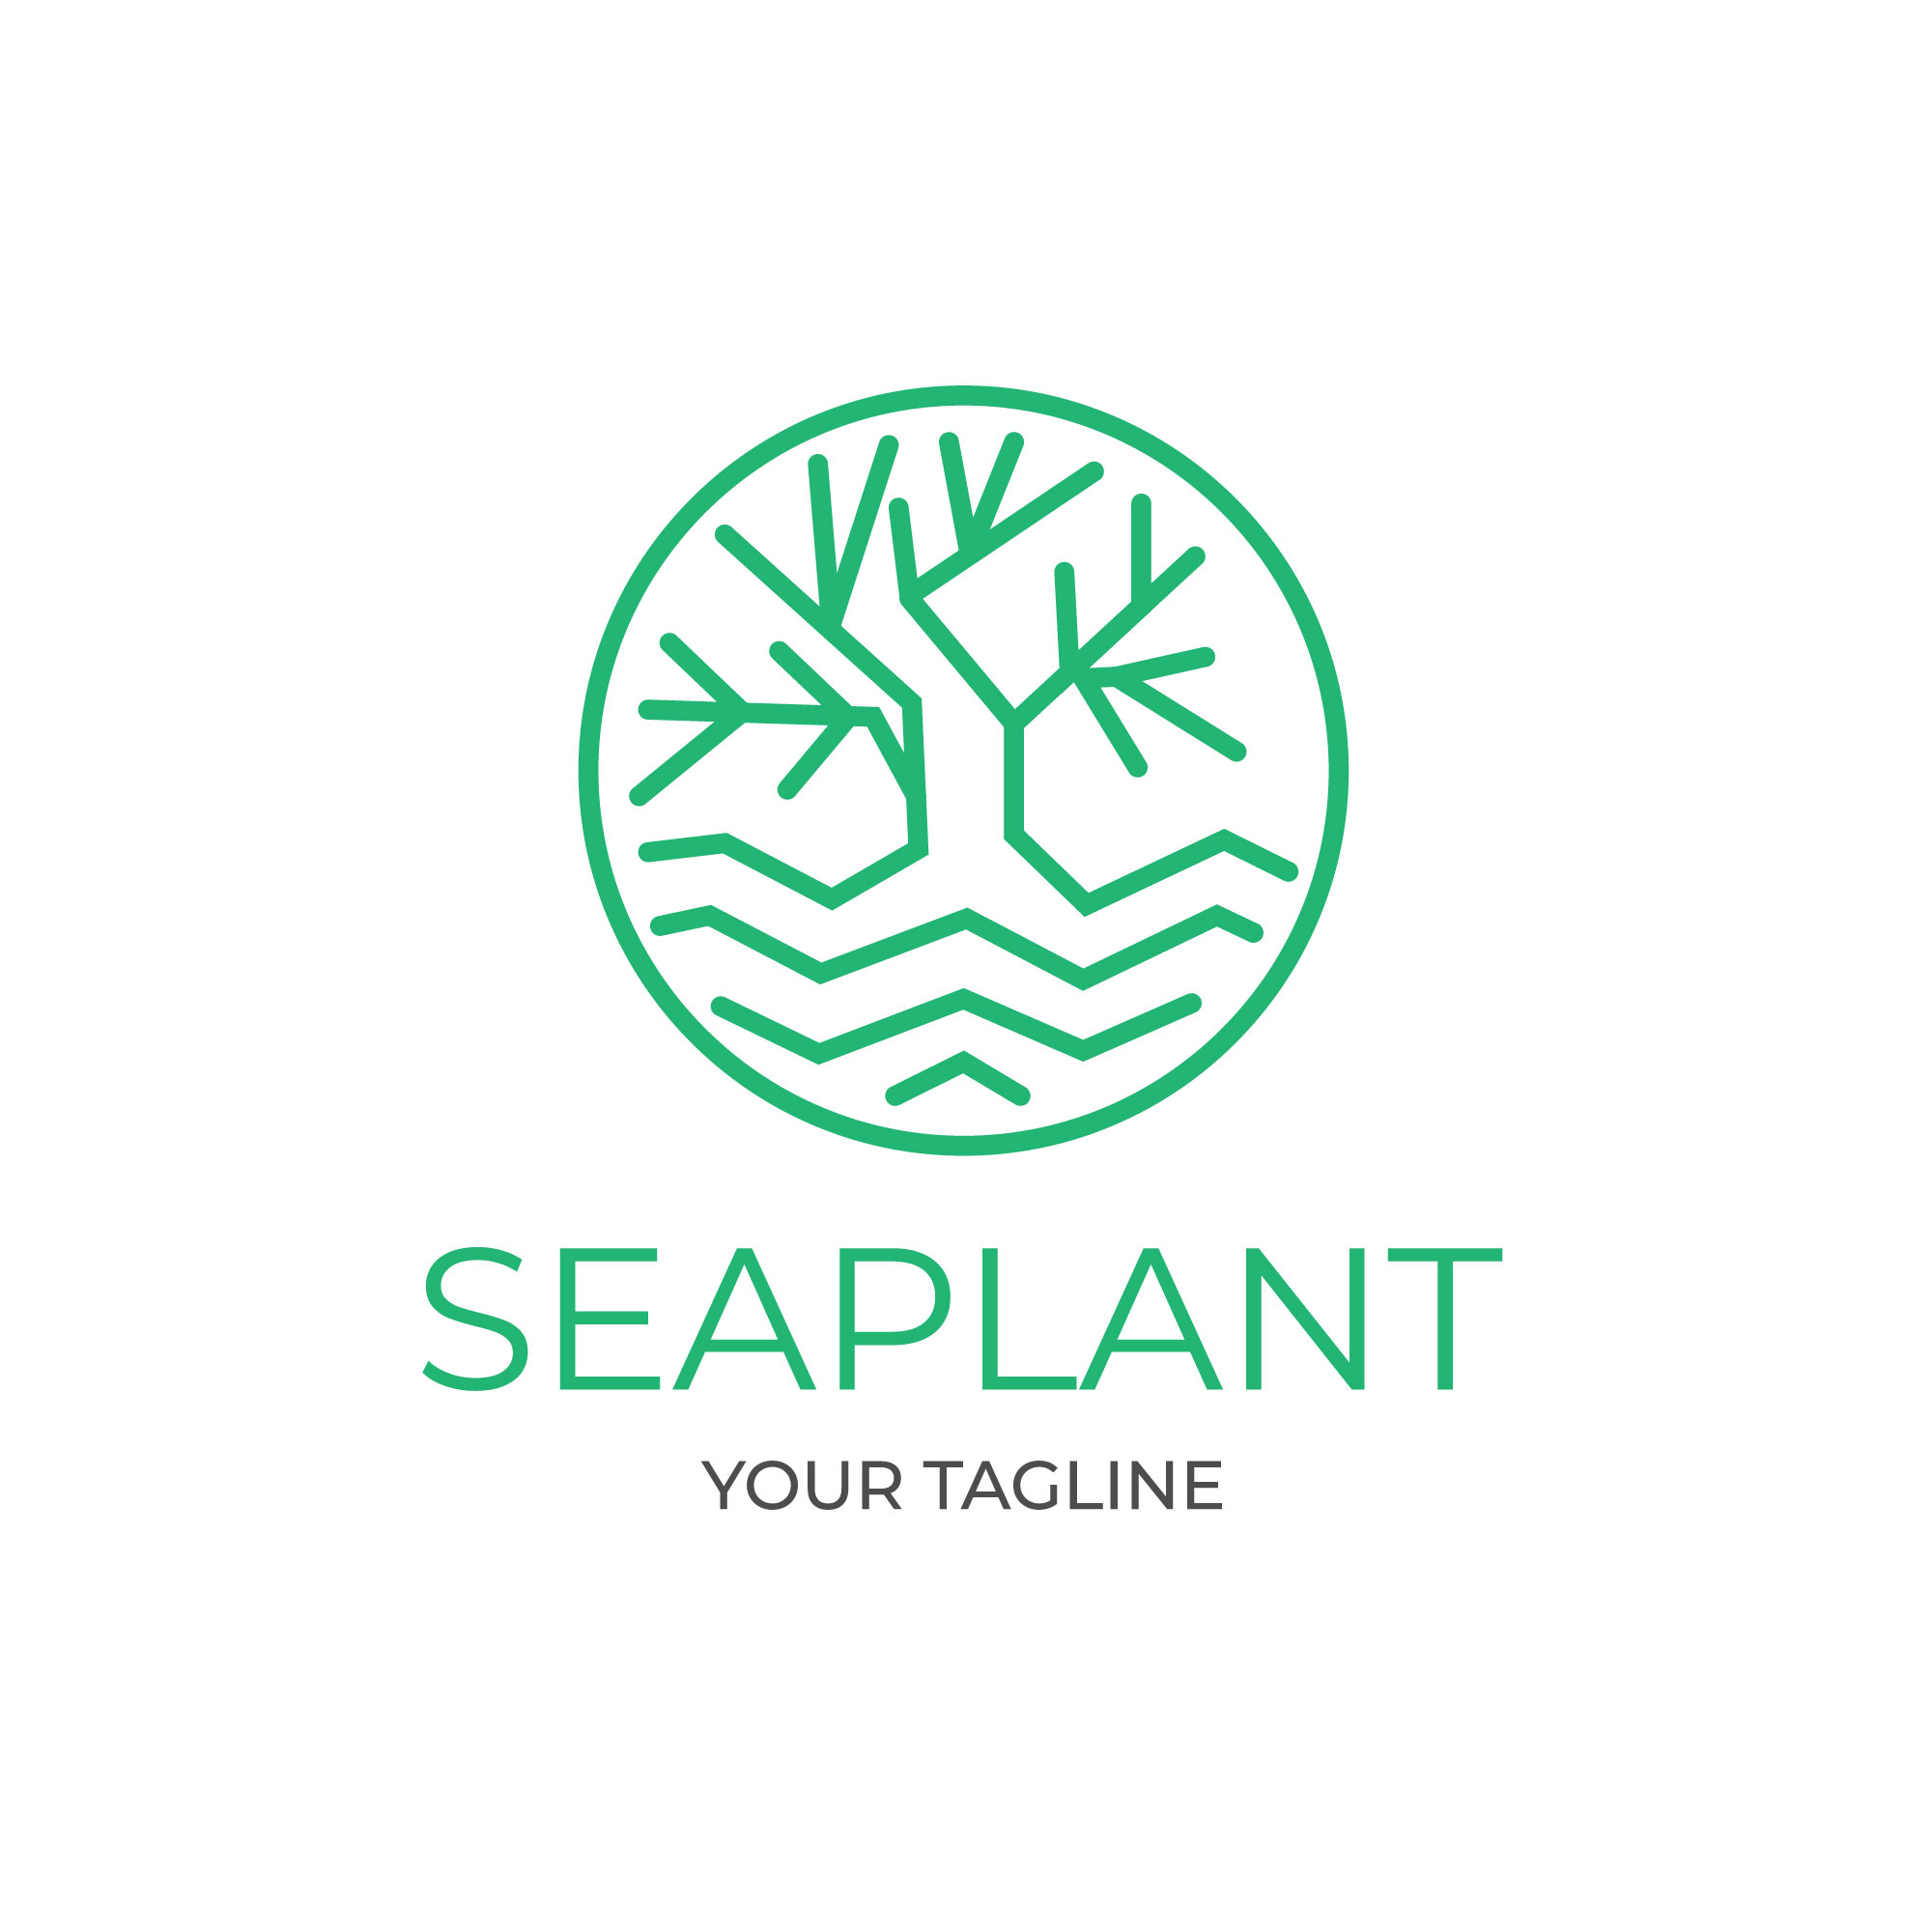 Sea plant nature logo designs